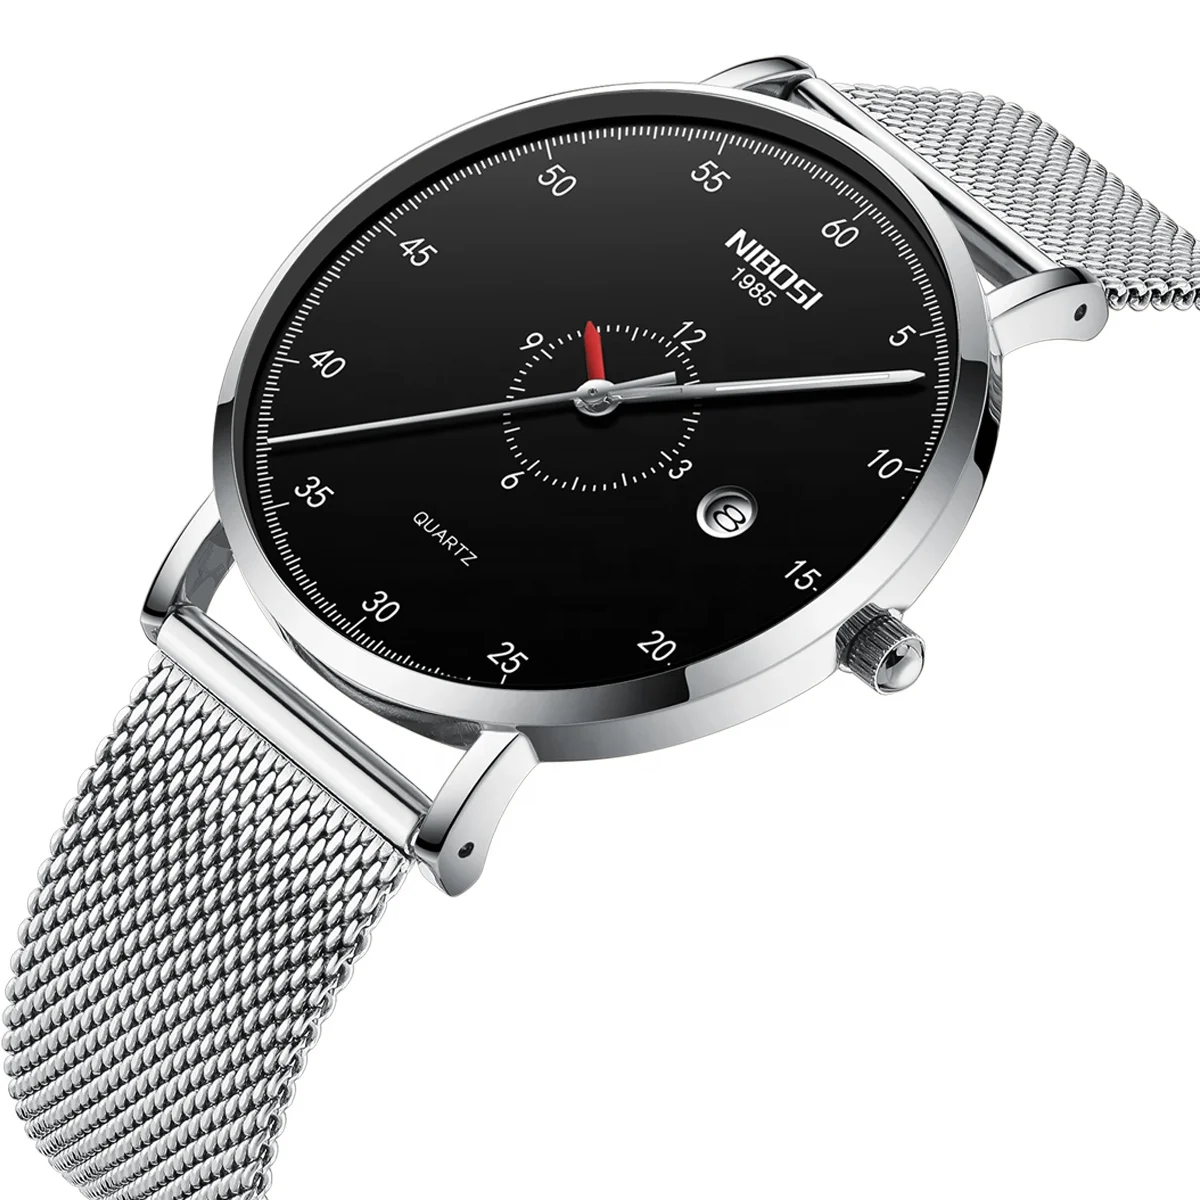 

NIBOSI 2360 Mens Watches Top Brand Luxury Fashion Watch Slim Mesh Date Waterproof Quartz Watch For Men Black Clock dropshipping